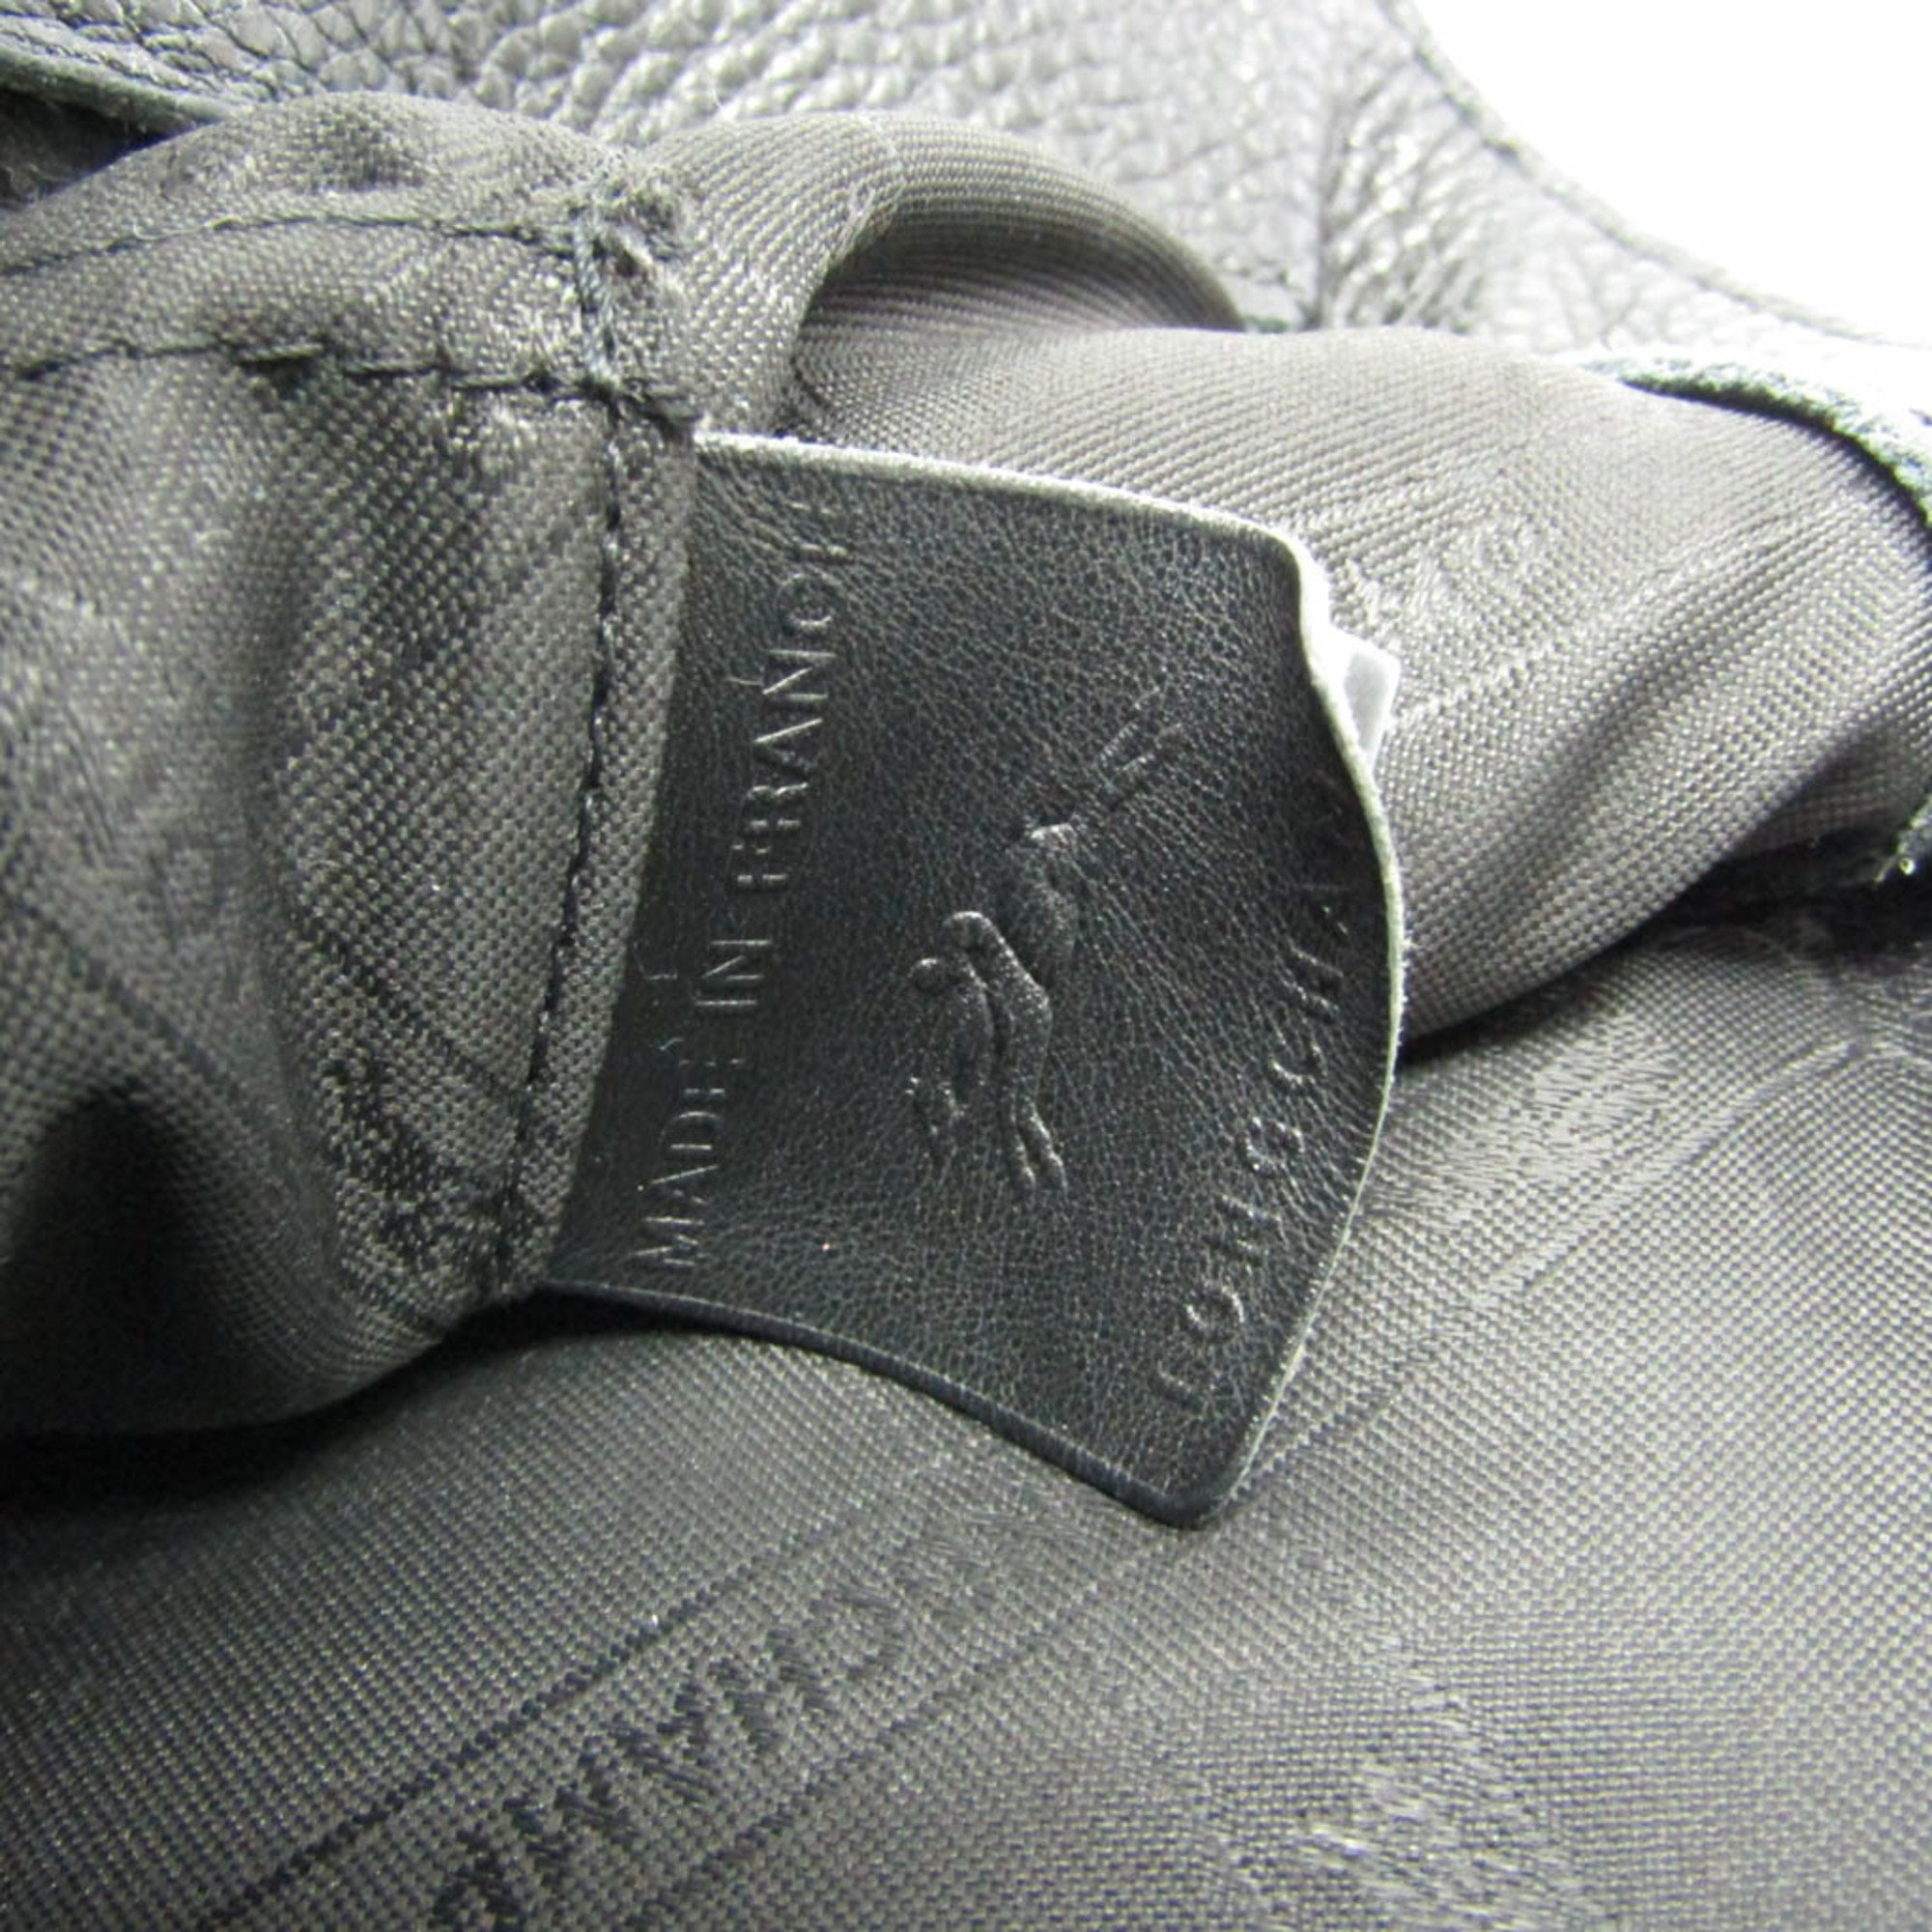 Longchamp Le Foulonne 1099 021 047 Women's Leather Handbag,Shoulder Bag Black